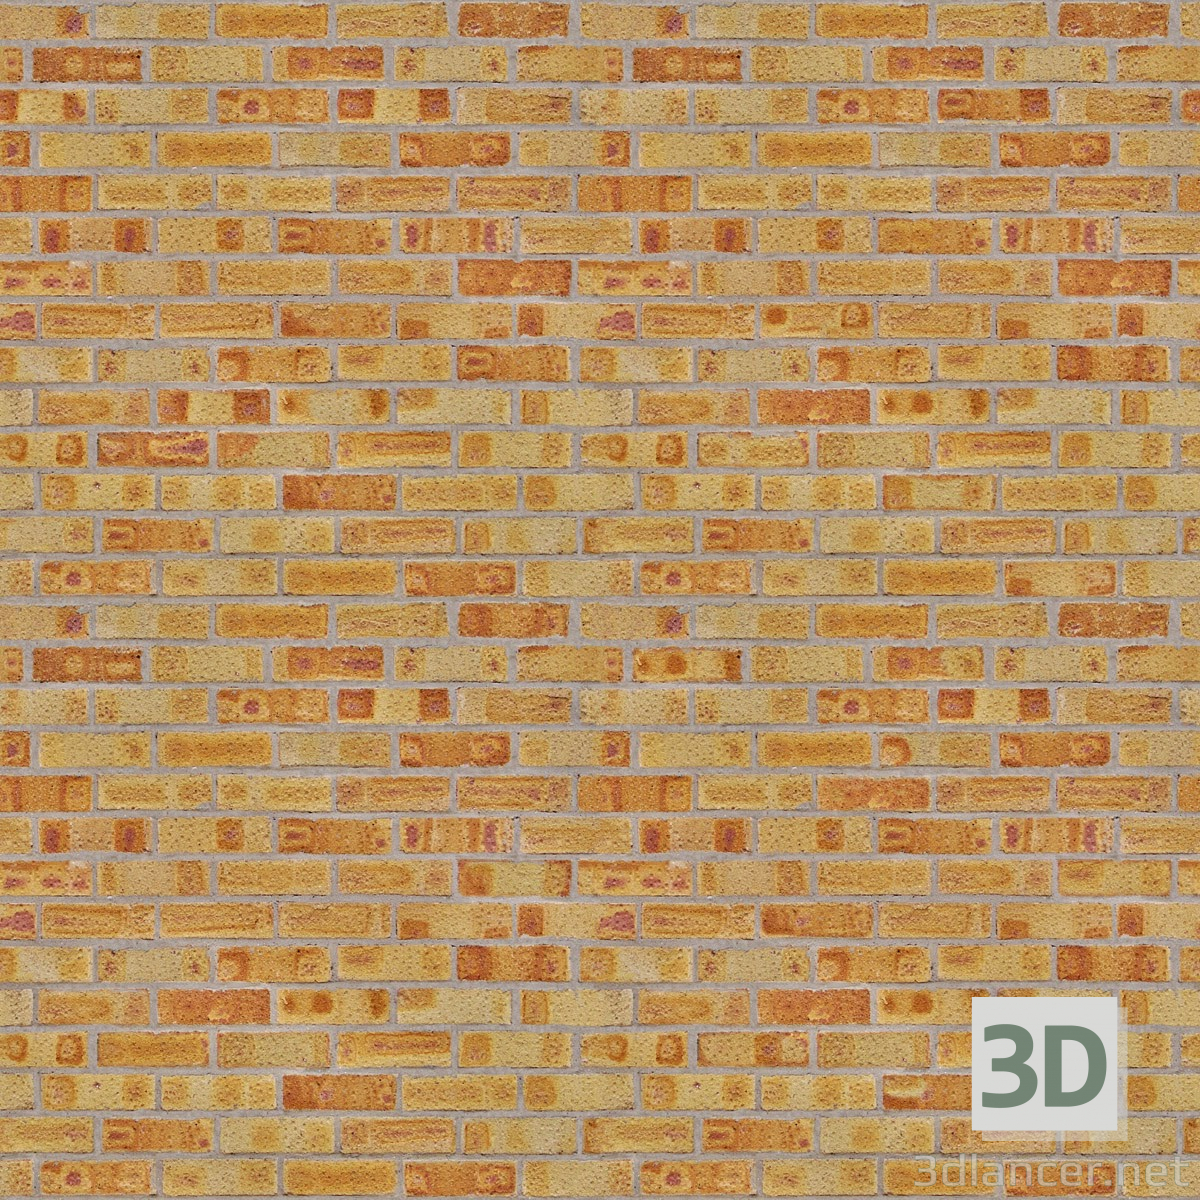 Texture brickwork 008 free download - image